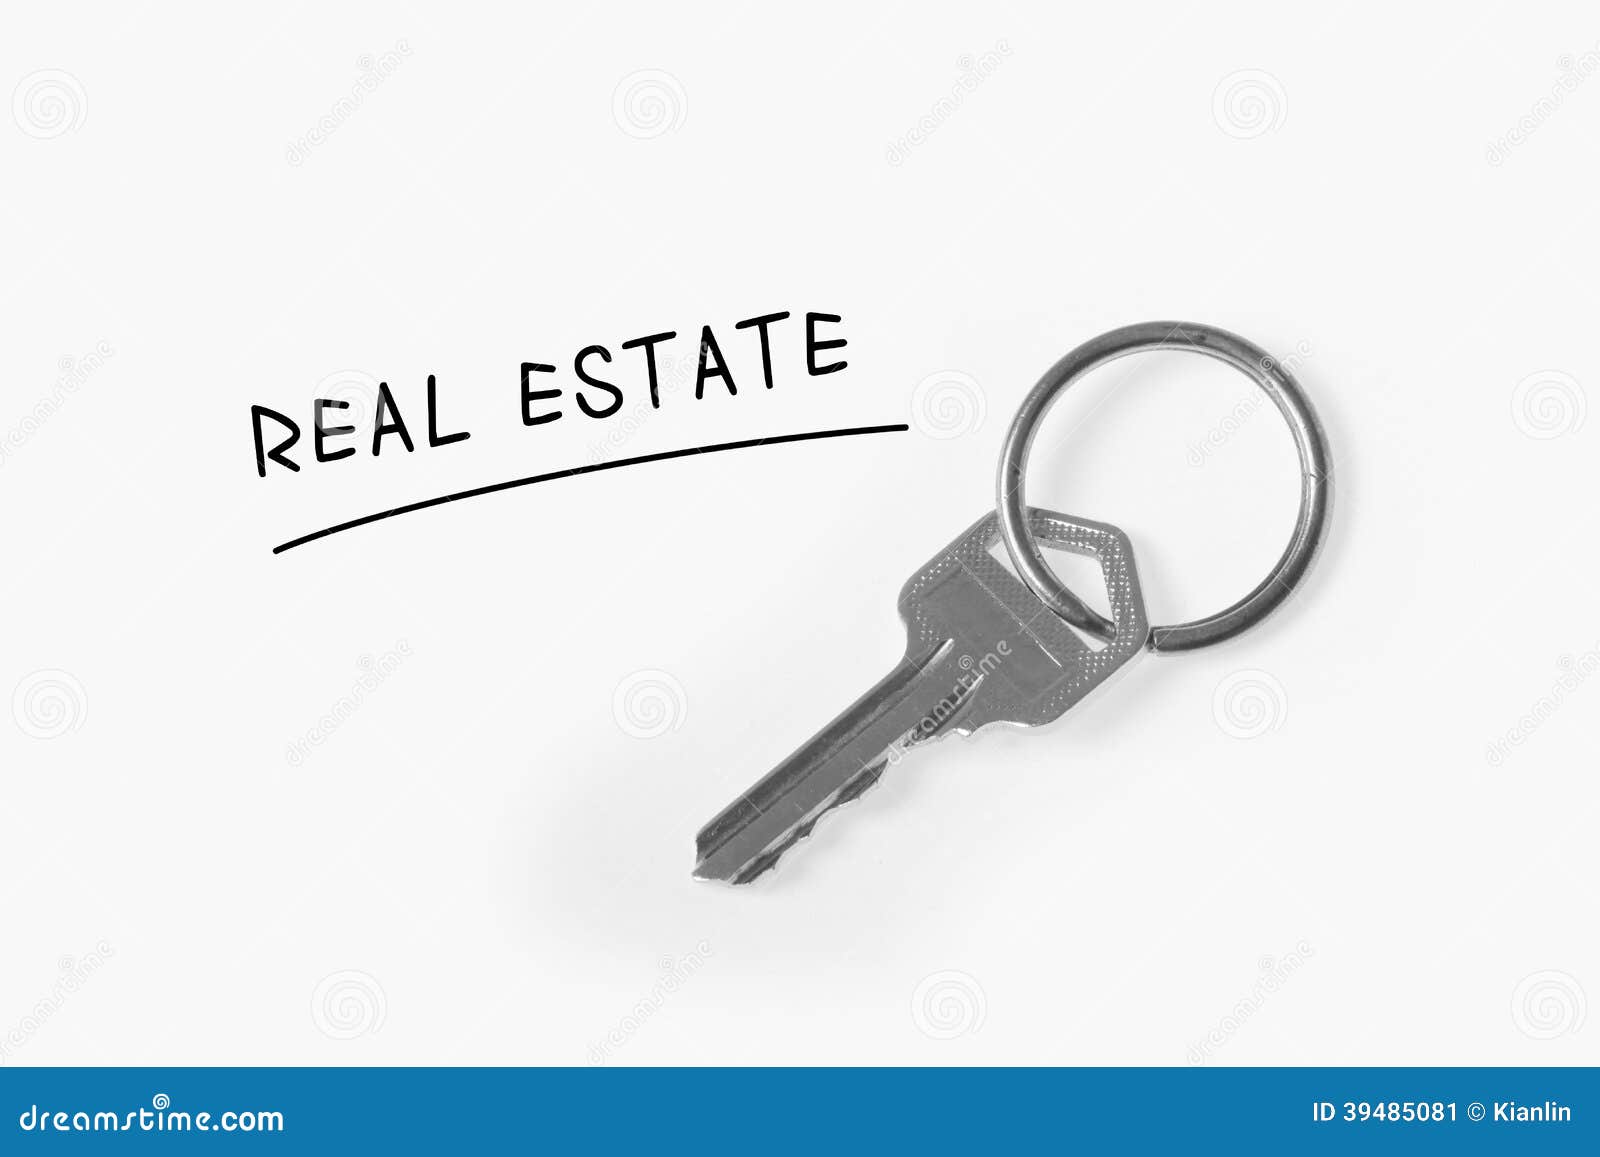 real estate sale